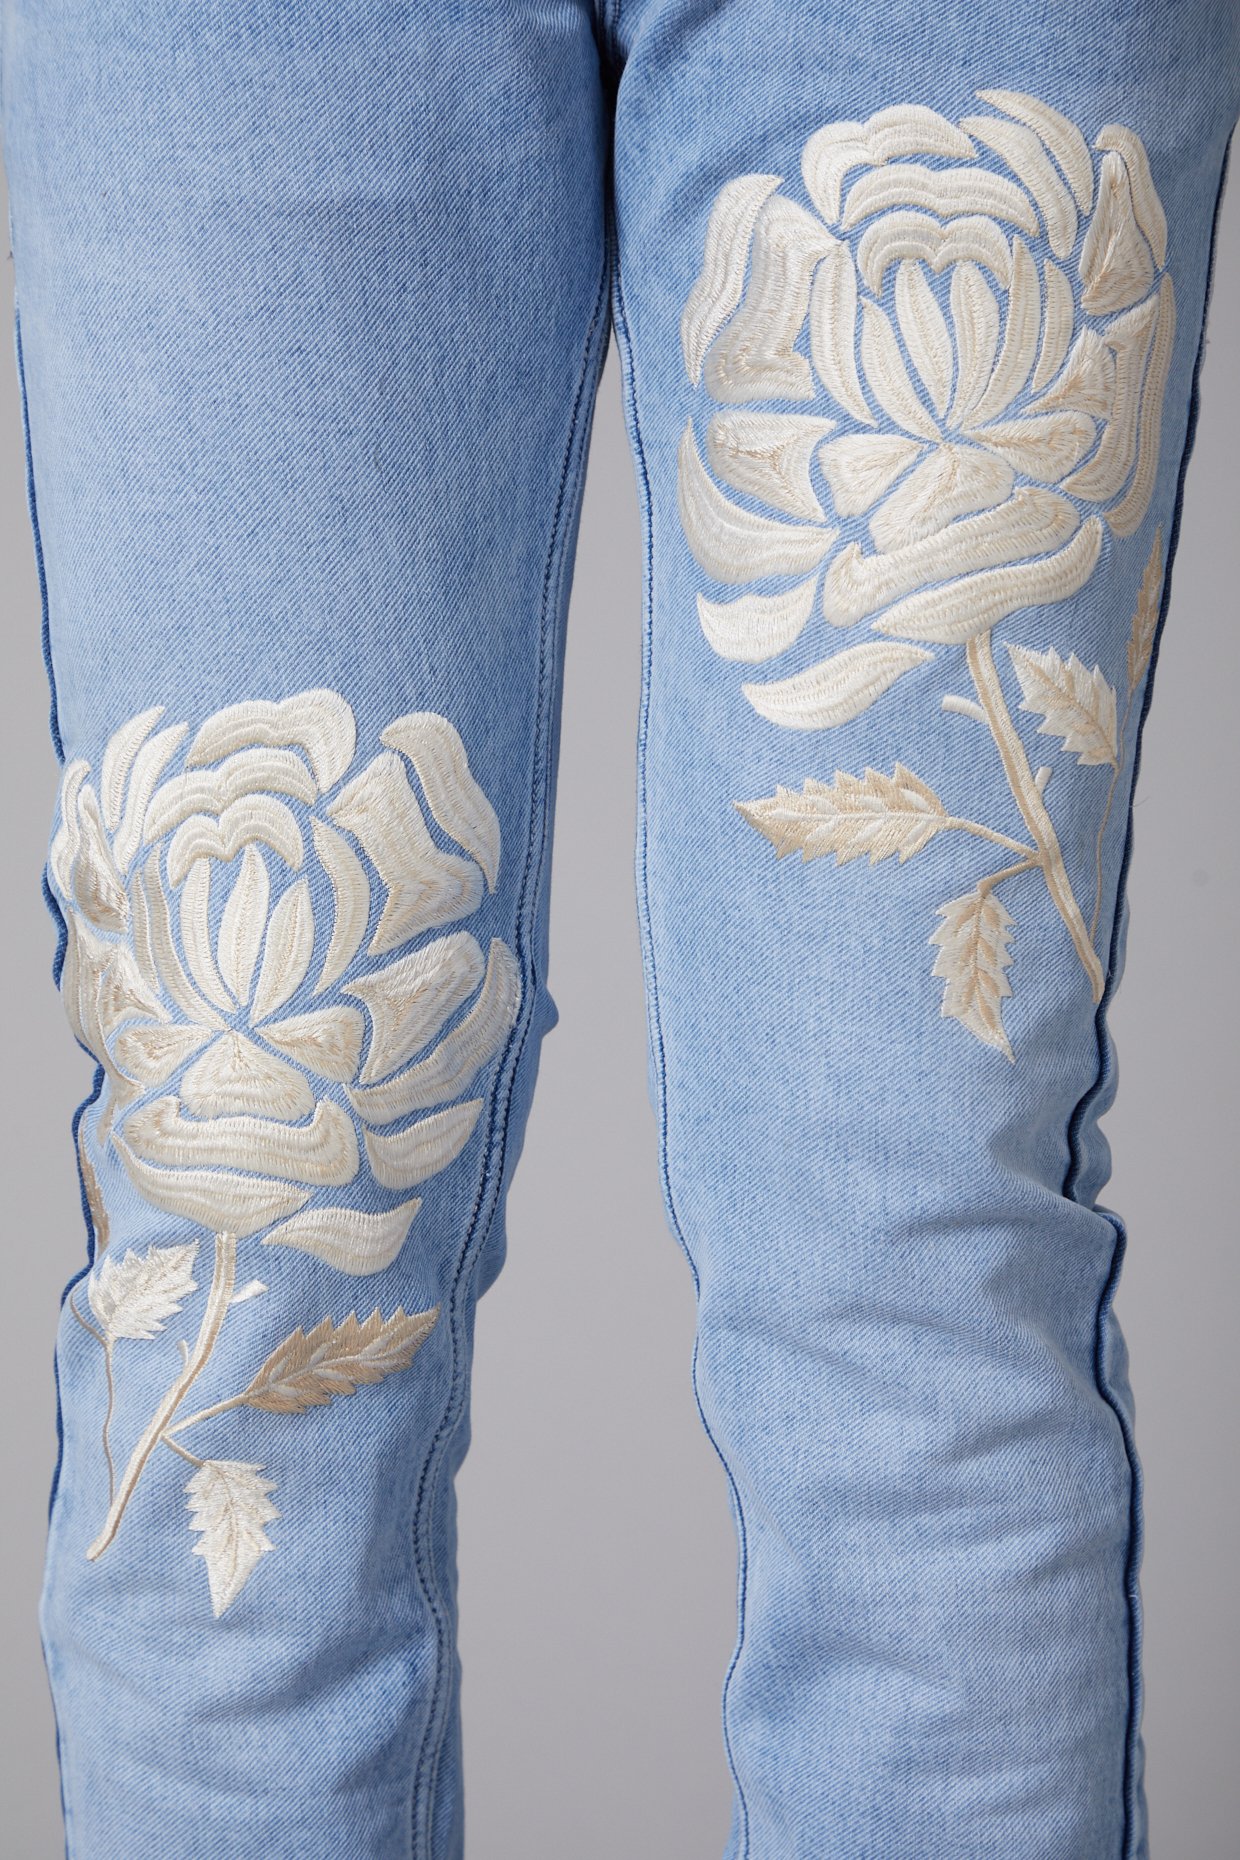 🎀 Suko Jeans Blue Denim White Floral Embroidery